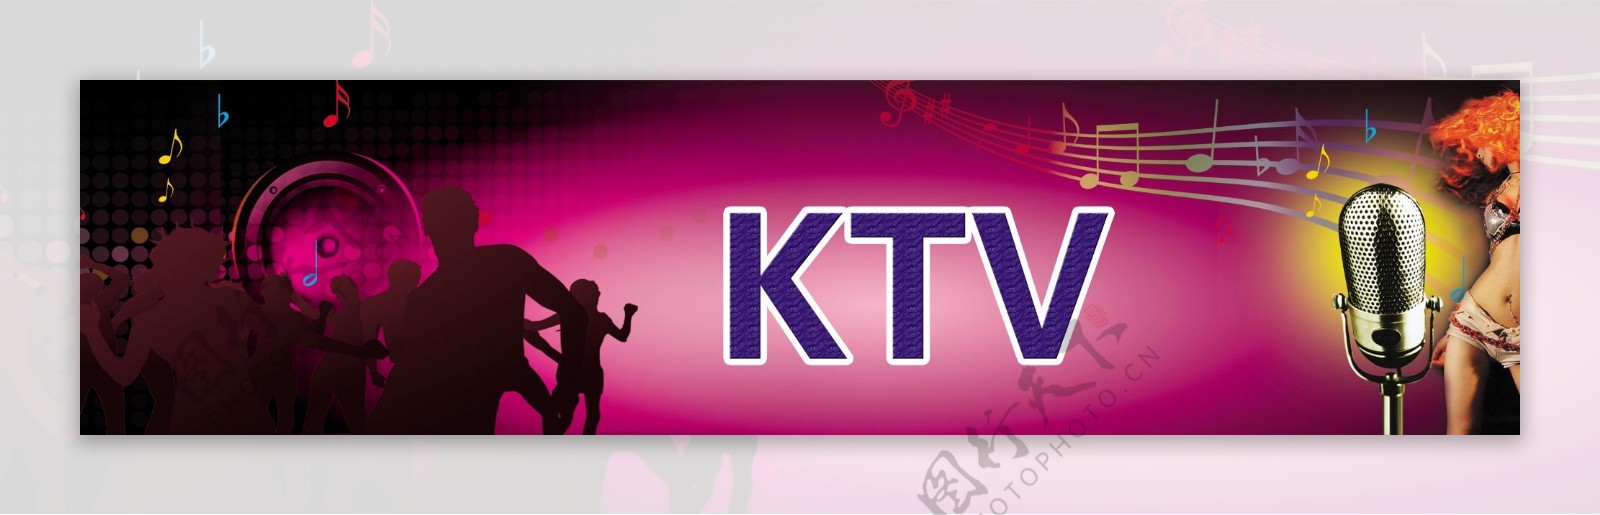 KTV设计广告